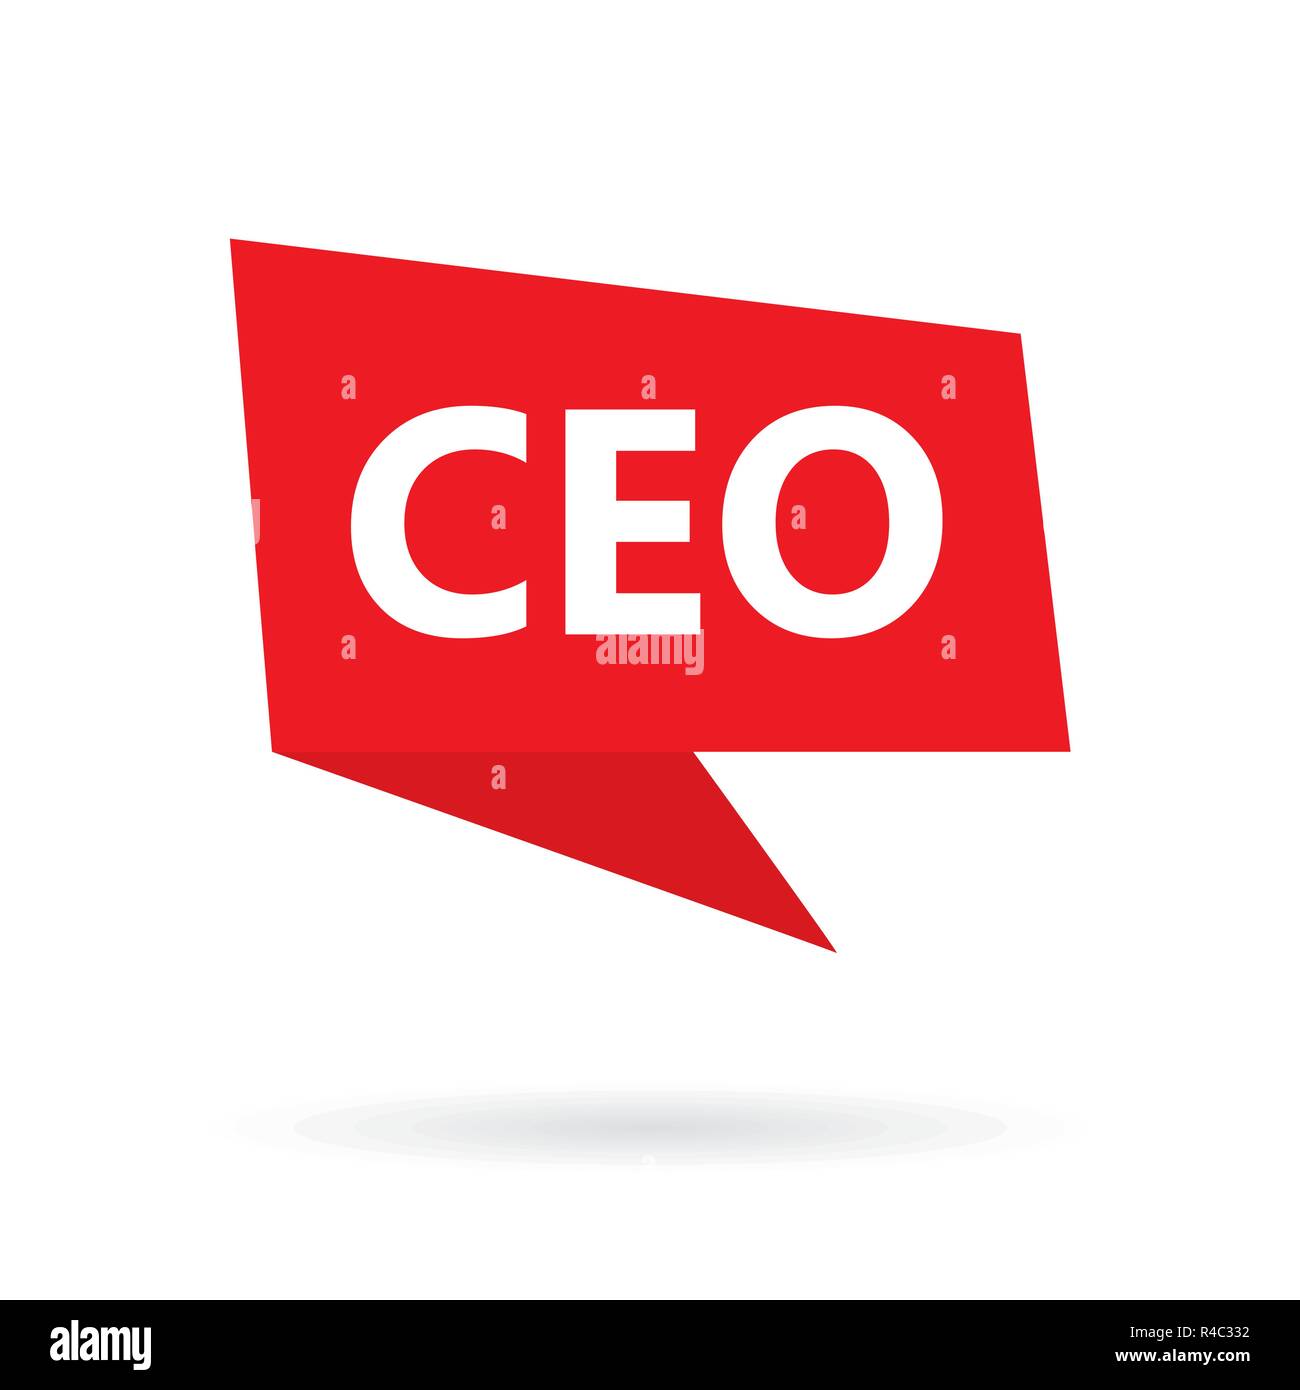 CEO (Chief Executive Officer) acronym on a speach bubble- vector illustration Stock Vector